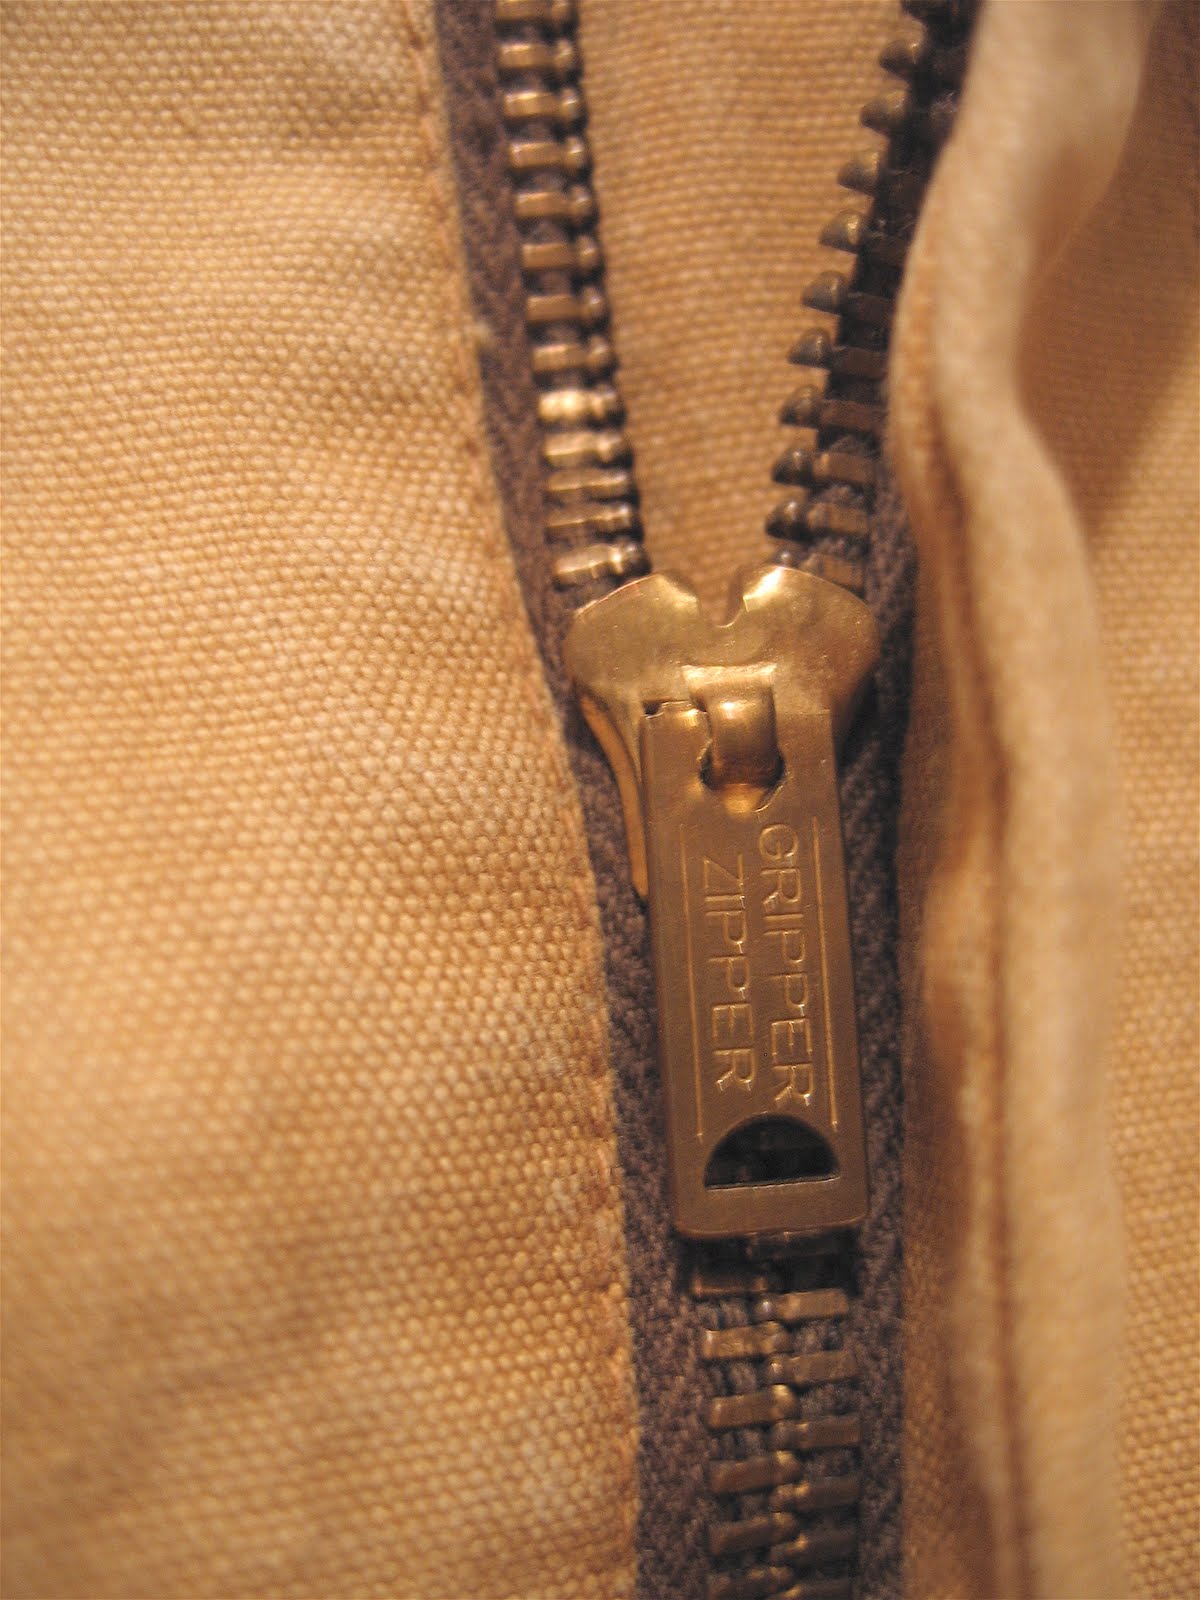 XtimemachineX: Vintage American Zippers